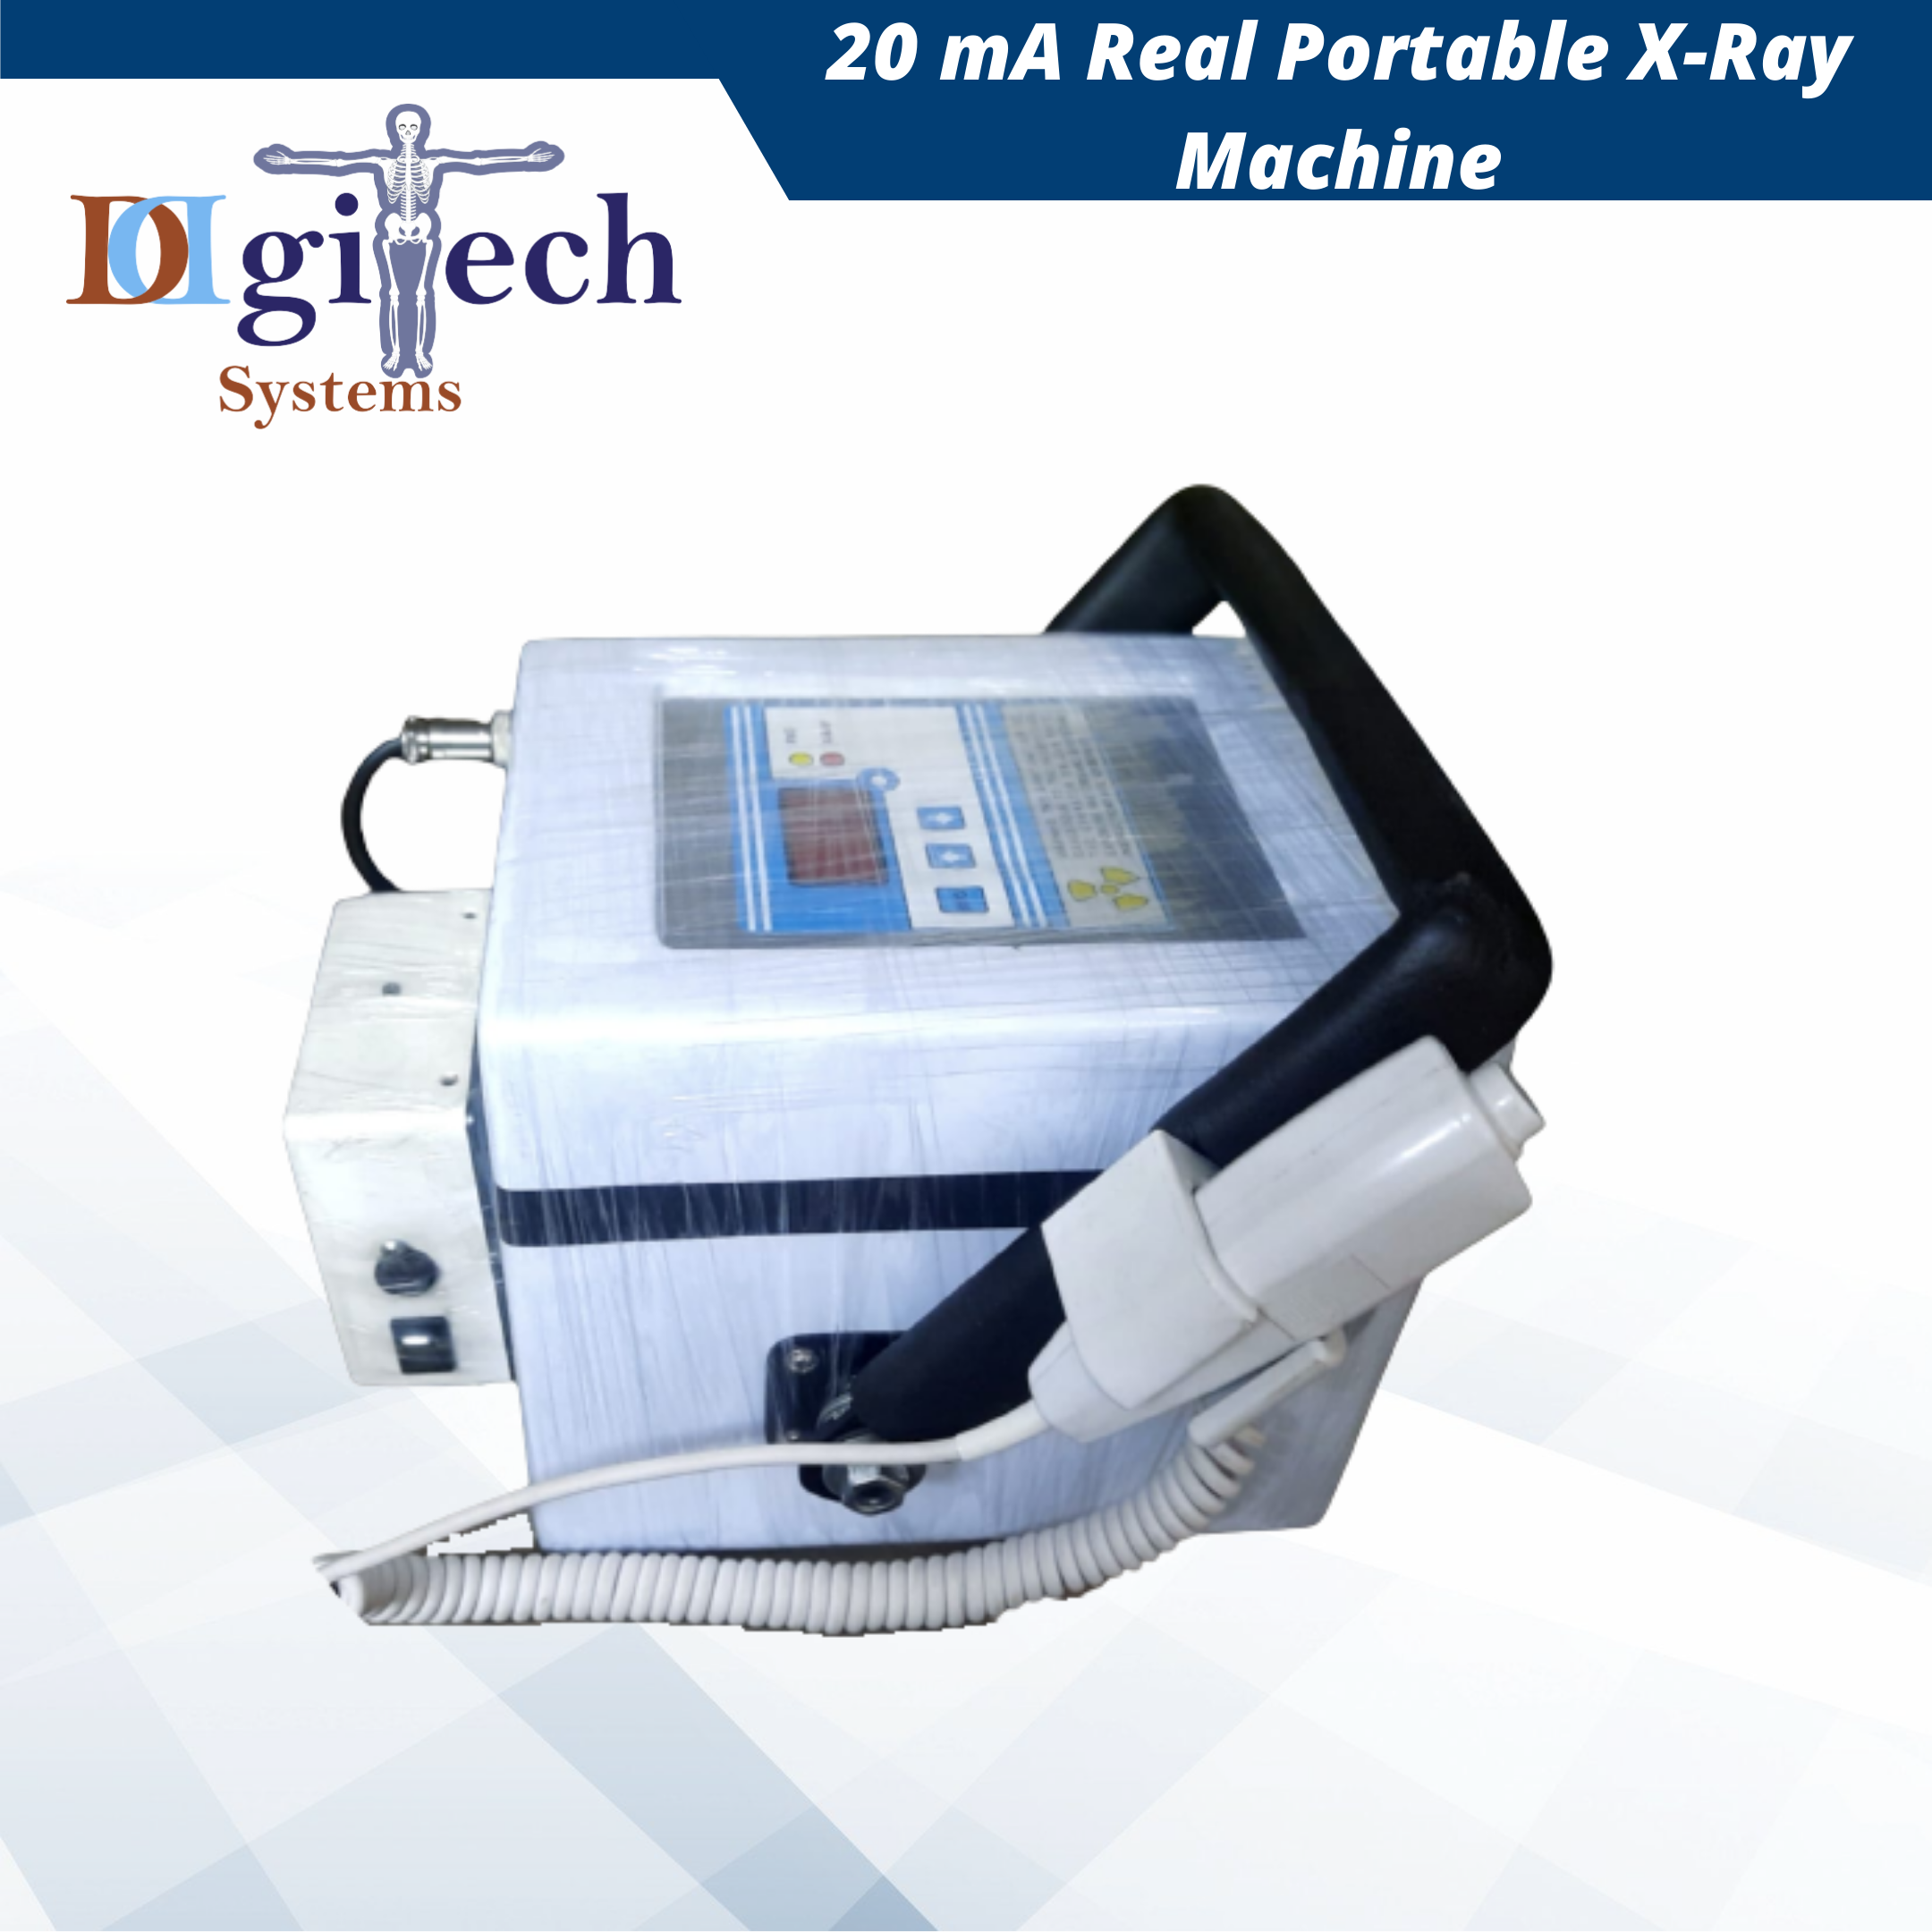 20 mA Real Portable X-Ray Machine